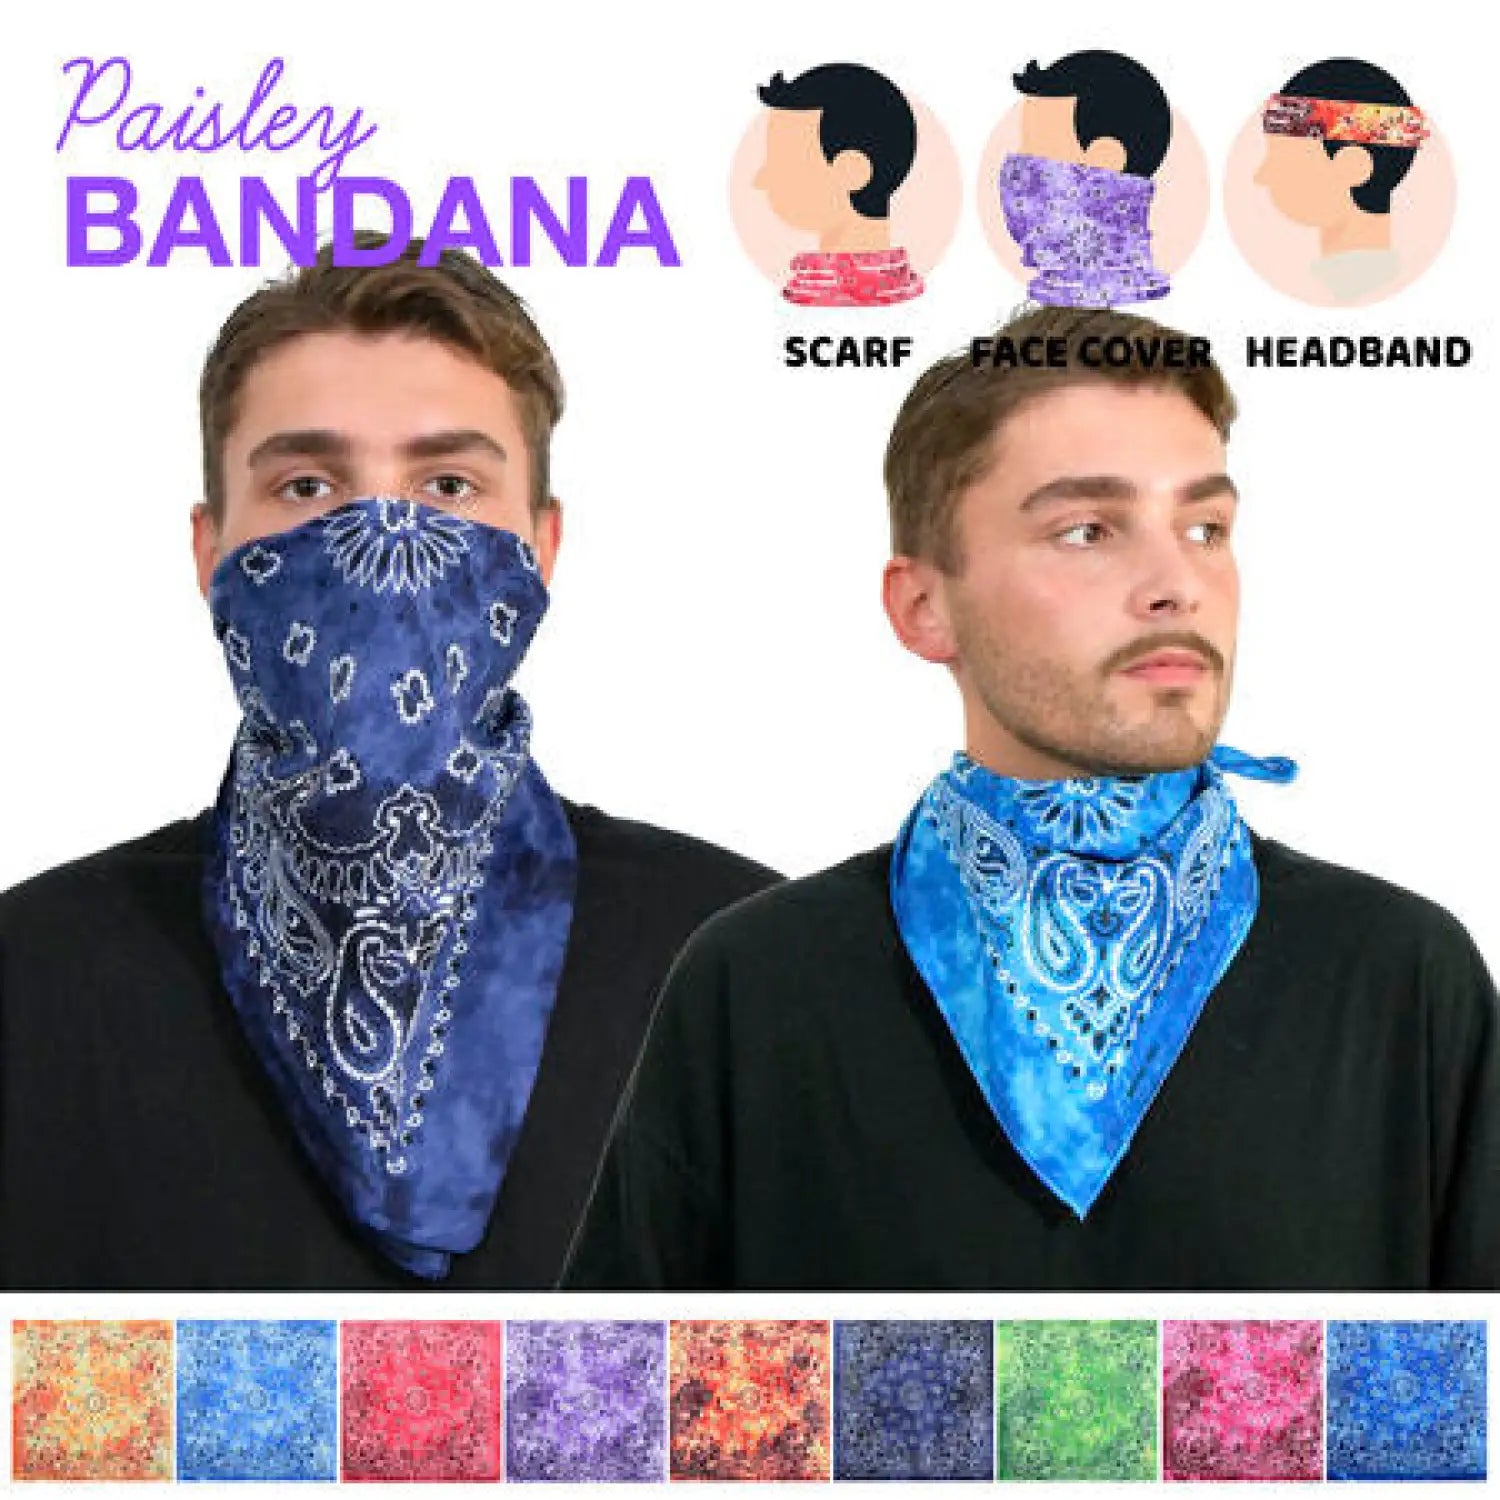 Two men in tie dye paisley bandanas